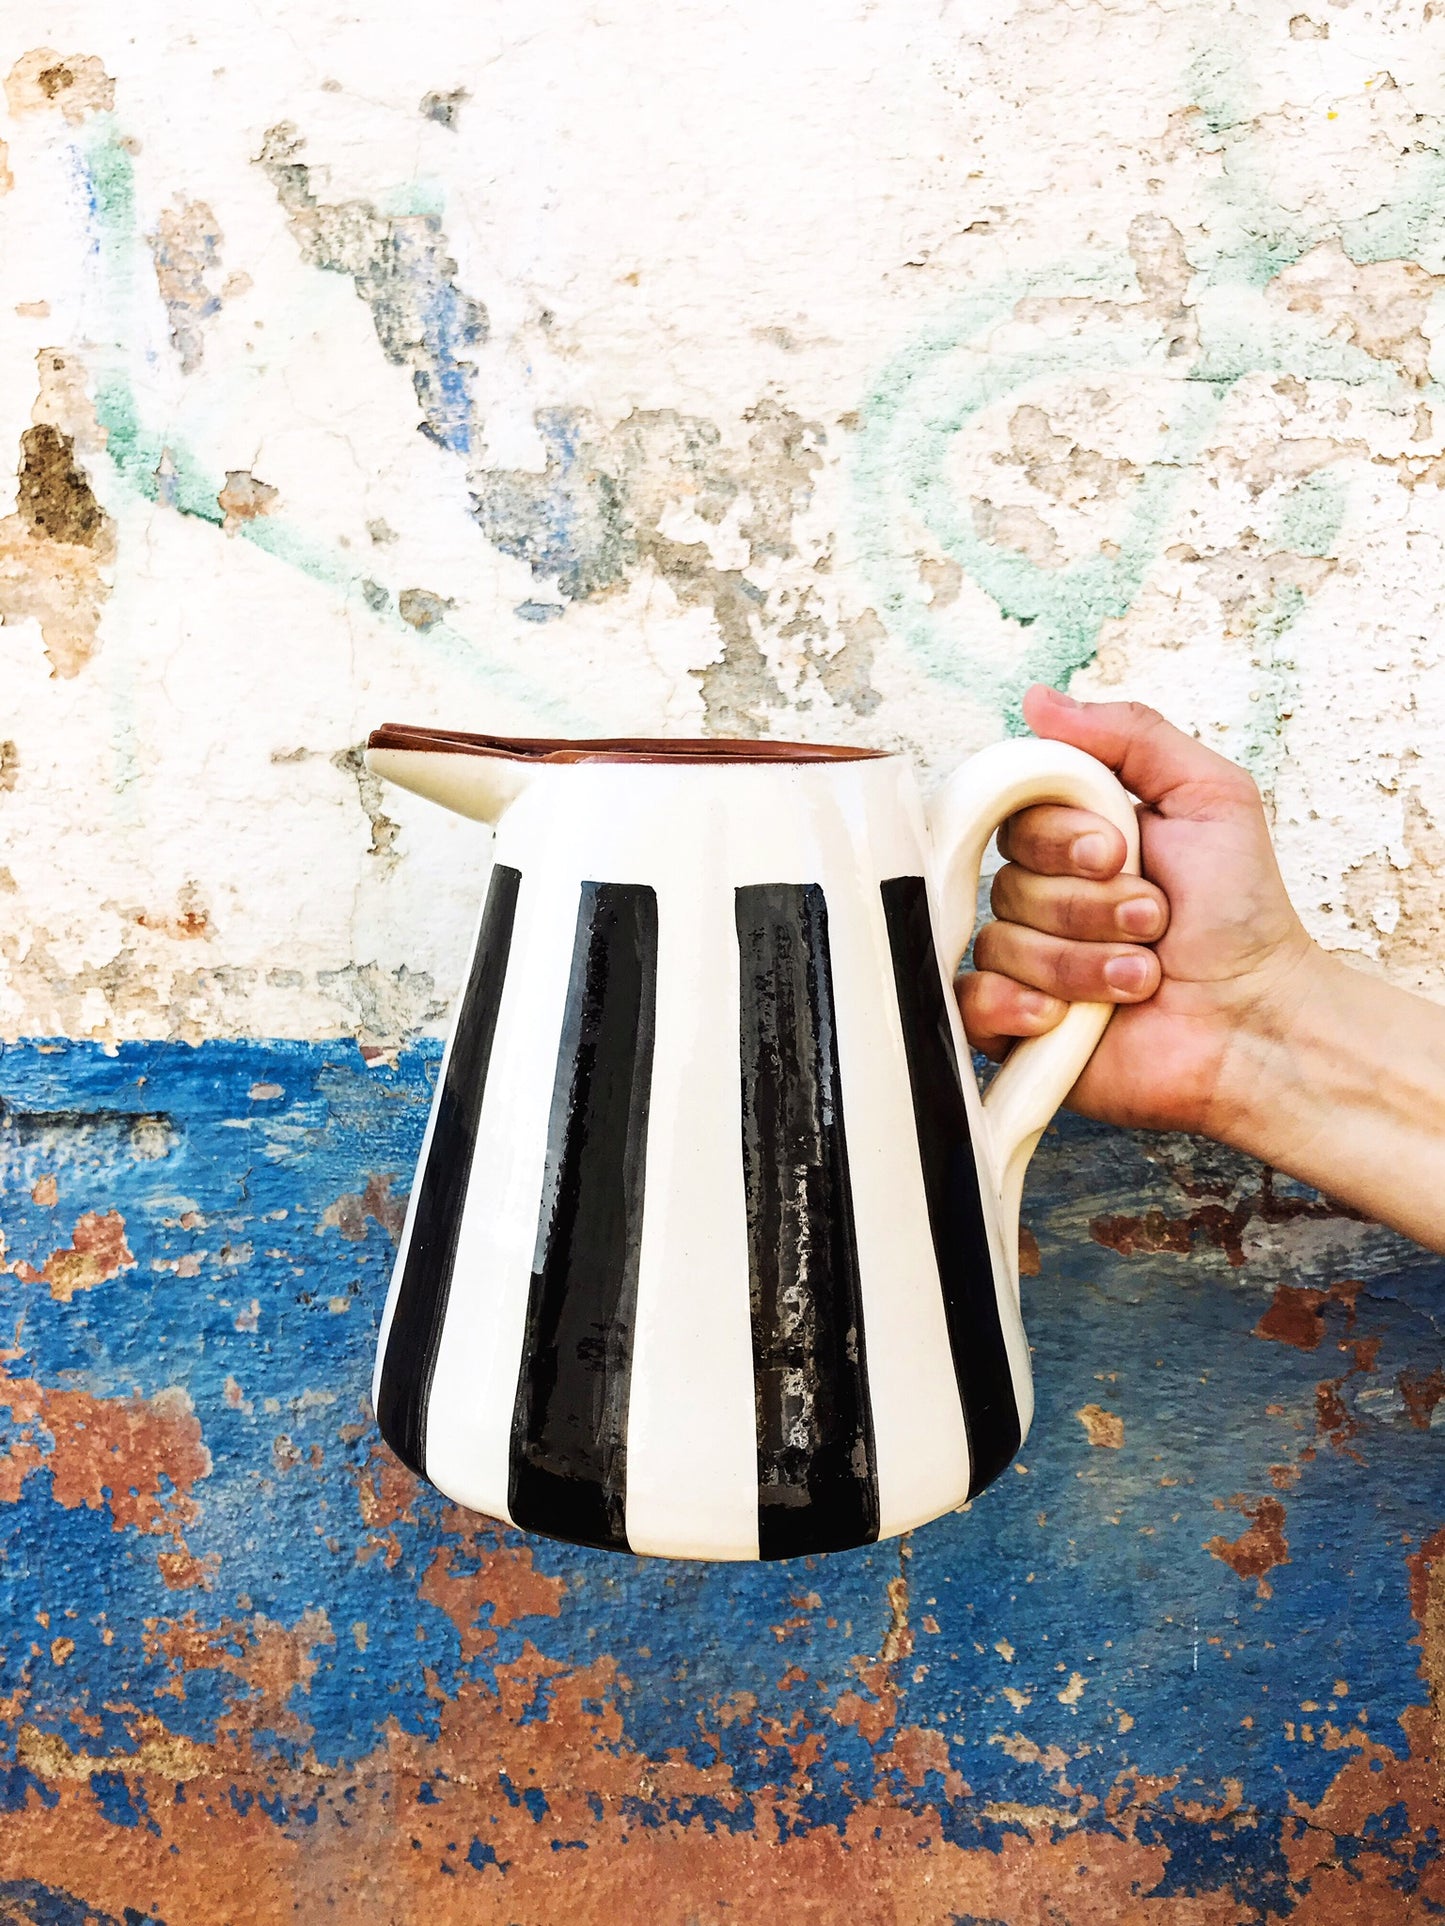 Handmade ceramic pitcher geometric pattern black and white B&W